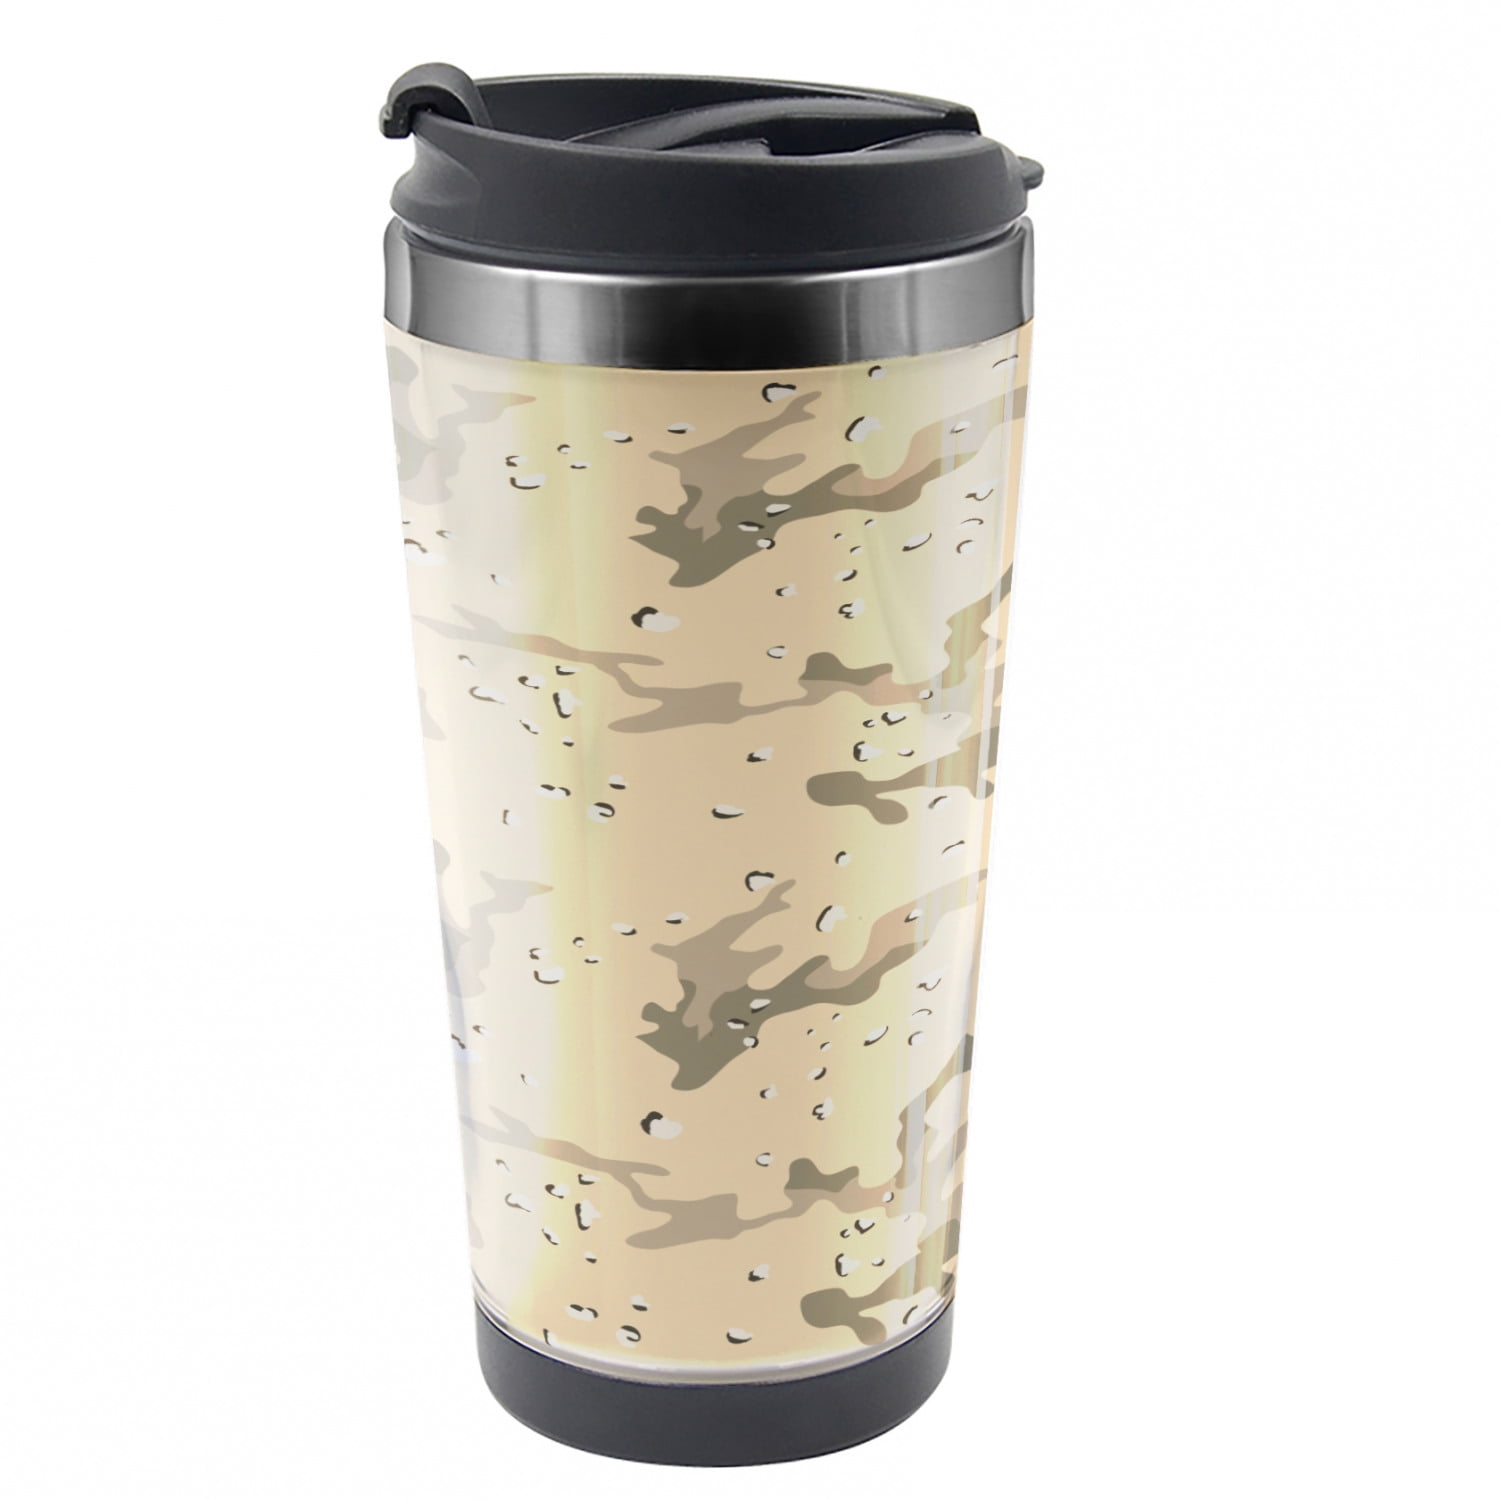 Camo Travel Mug, Hiding in Desert Camo, Steel Thermal Cup, 16 oz